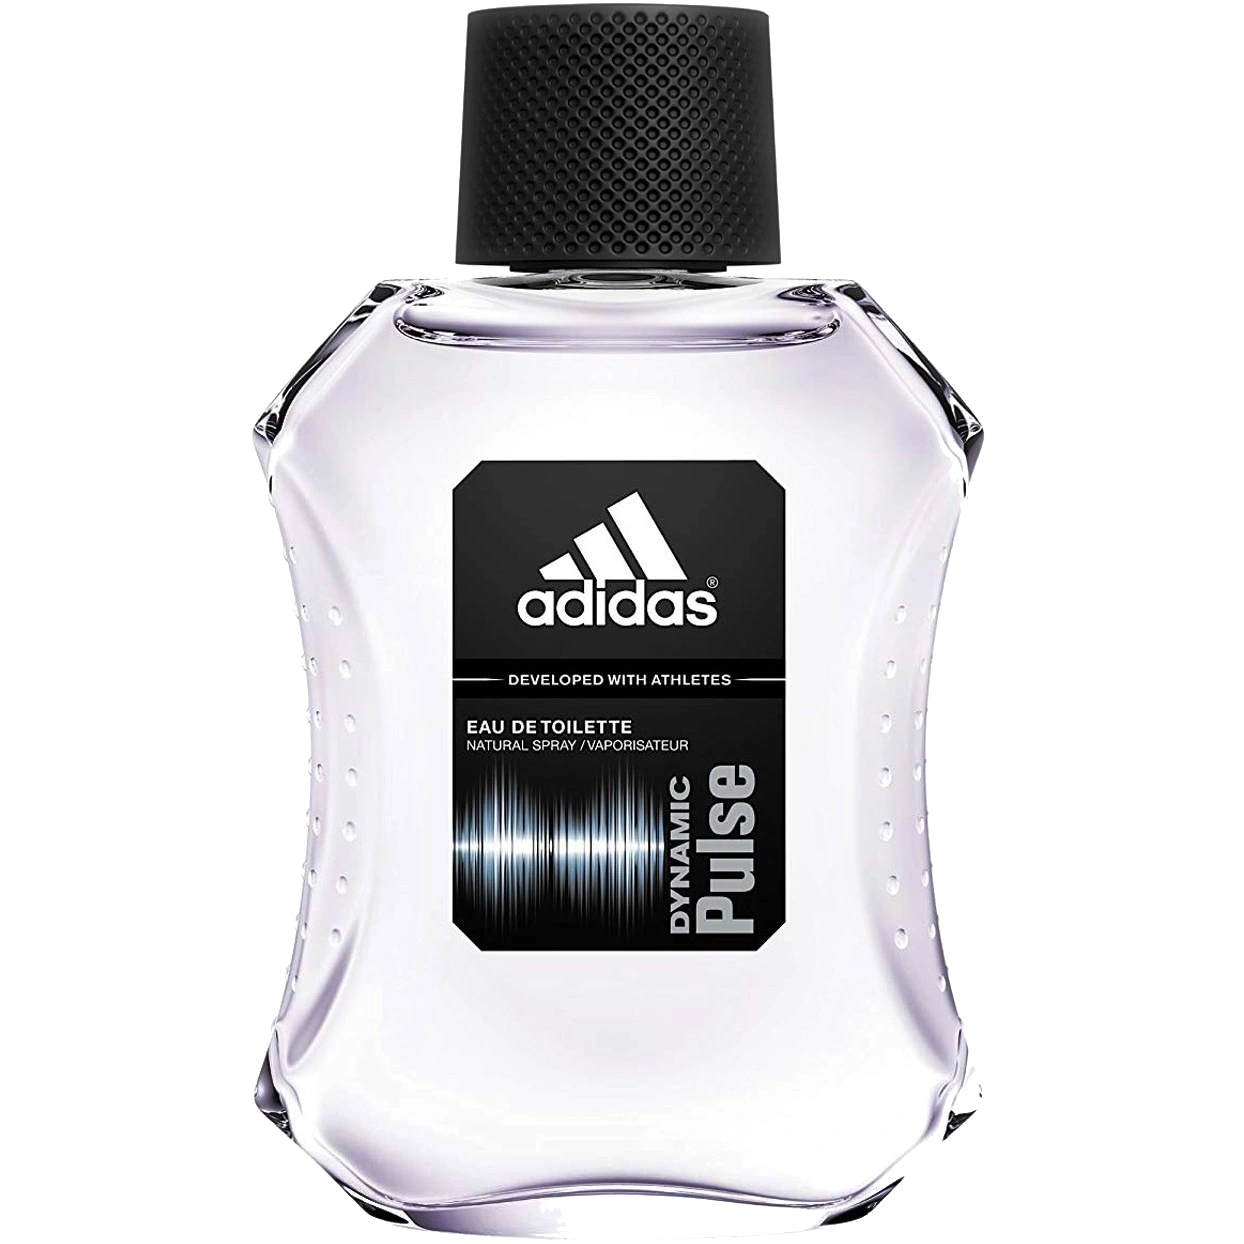 A sleek bottle of Adidas Dynamic Pulse perfume against a modern, minimalist background.